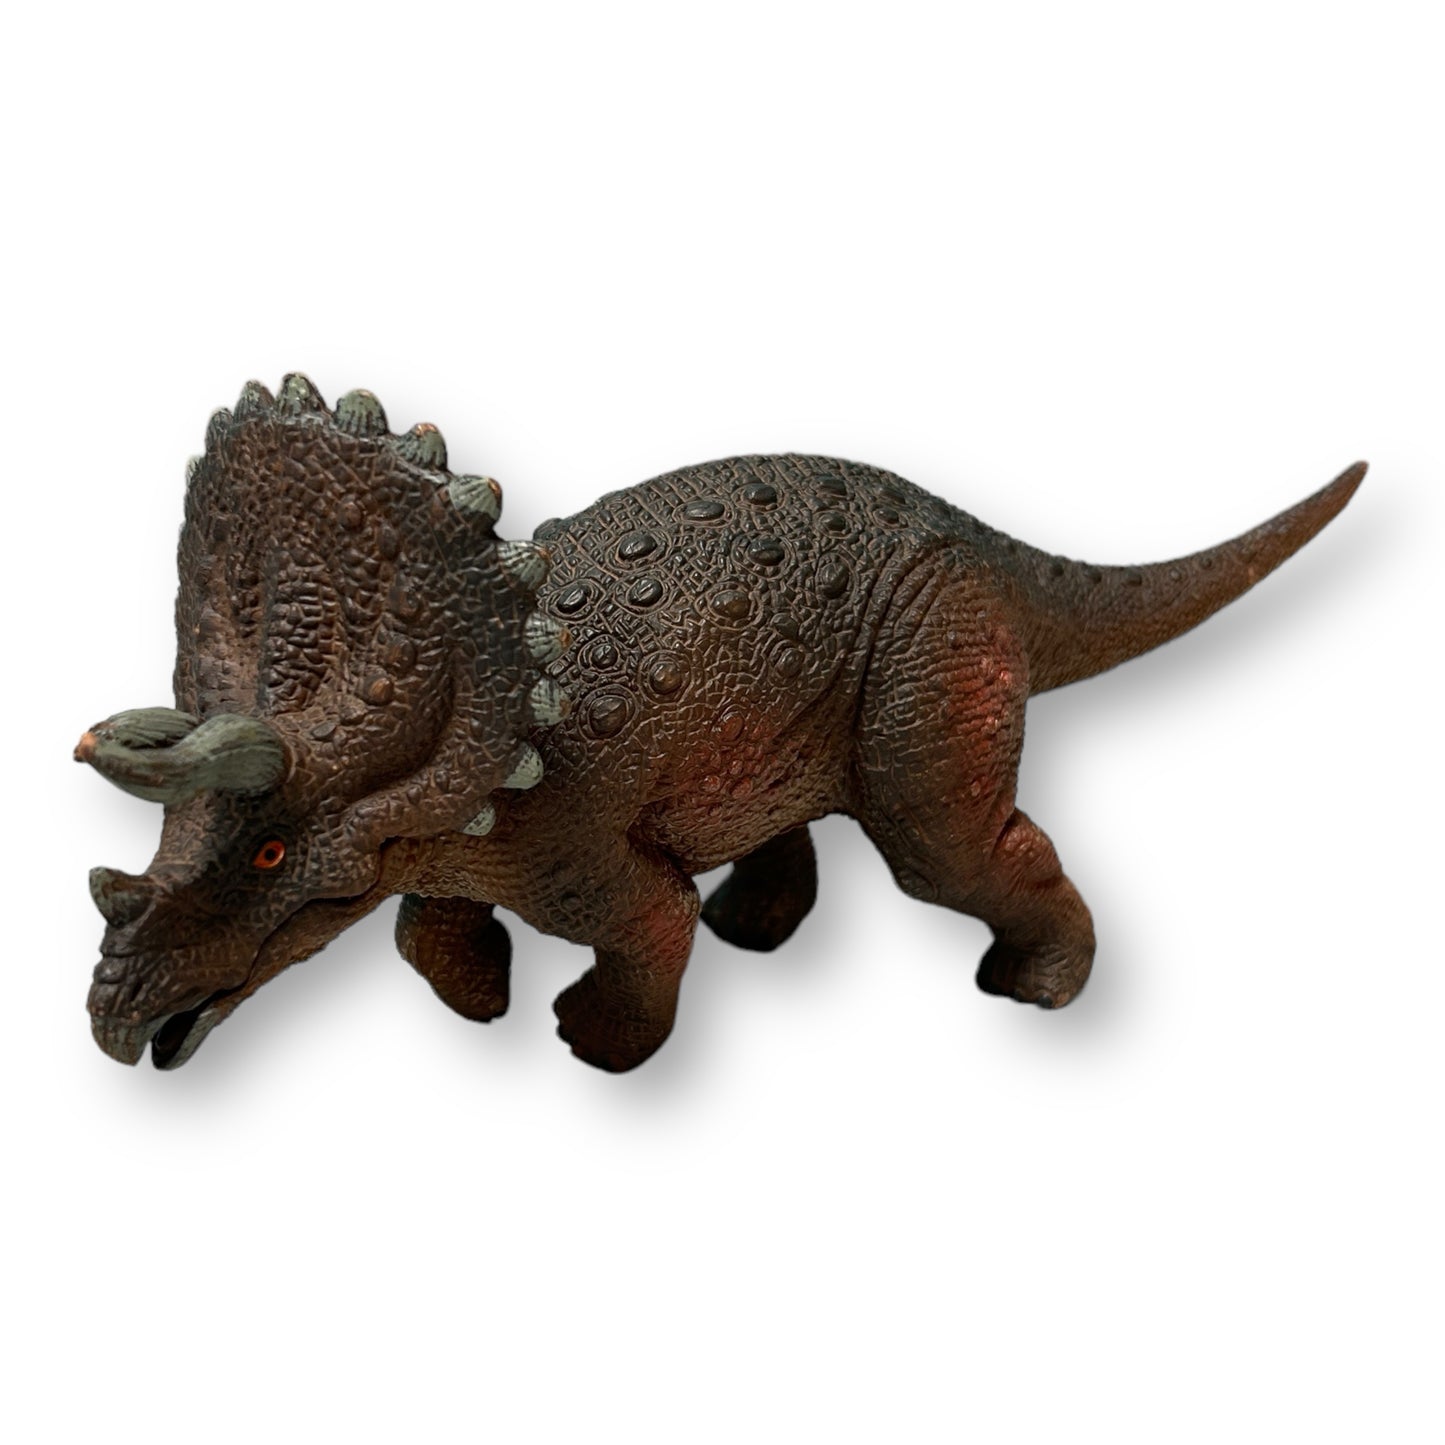 Triceratops Model Dinosaur Figure, 7.25"